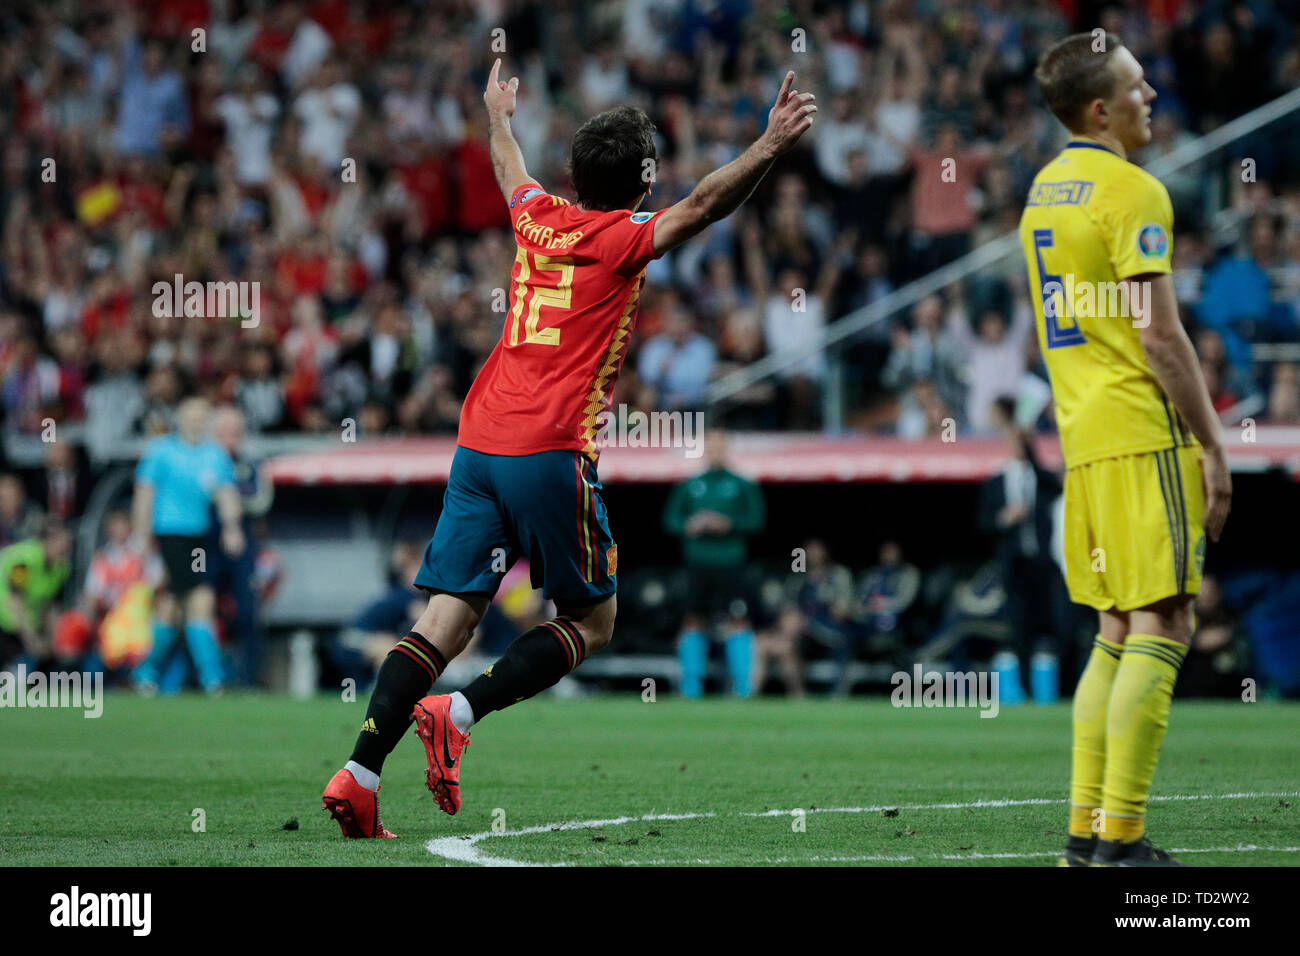 Spagna national team player Mikel Oyarzabal celebra durante UEFA EURO 2020 Qualifier match tra la Spagna e la Svezia a Santiago Bernabeu Stadium in Madrid. Punteggio finale: Spagna 3 - Svezia 0 Foto Stock